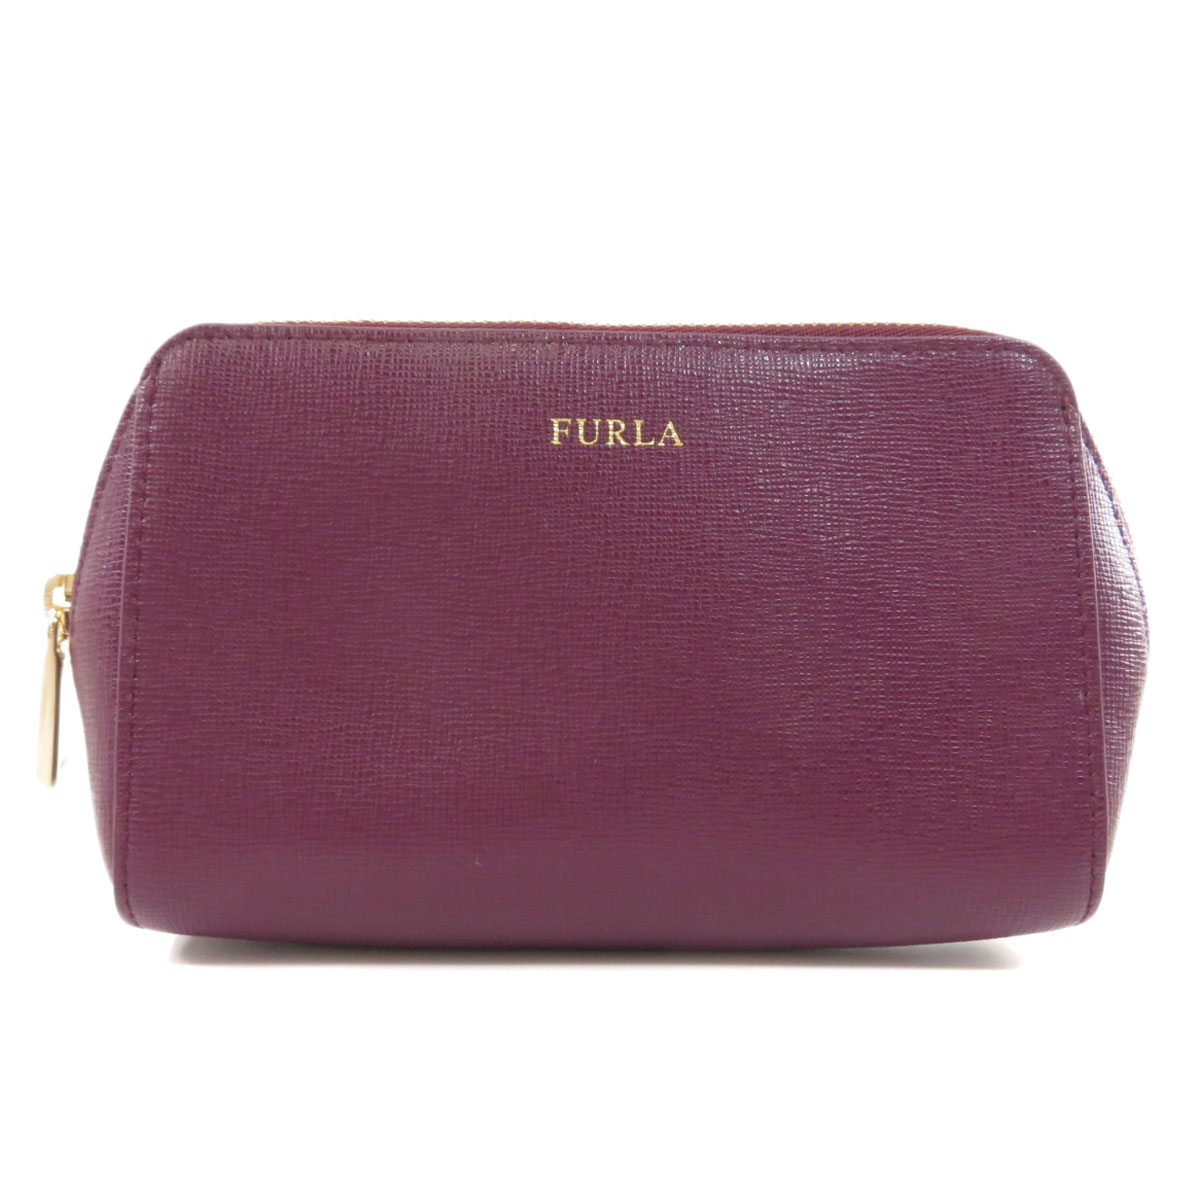 Furla Cosmetics Pouch logo Leather | eBay